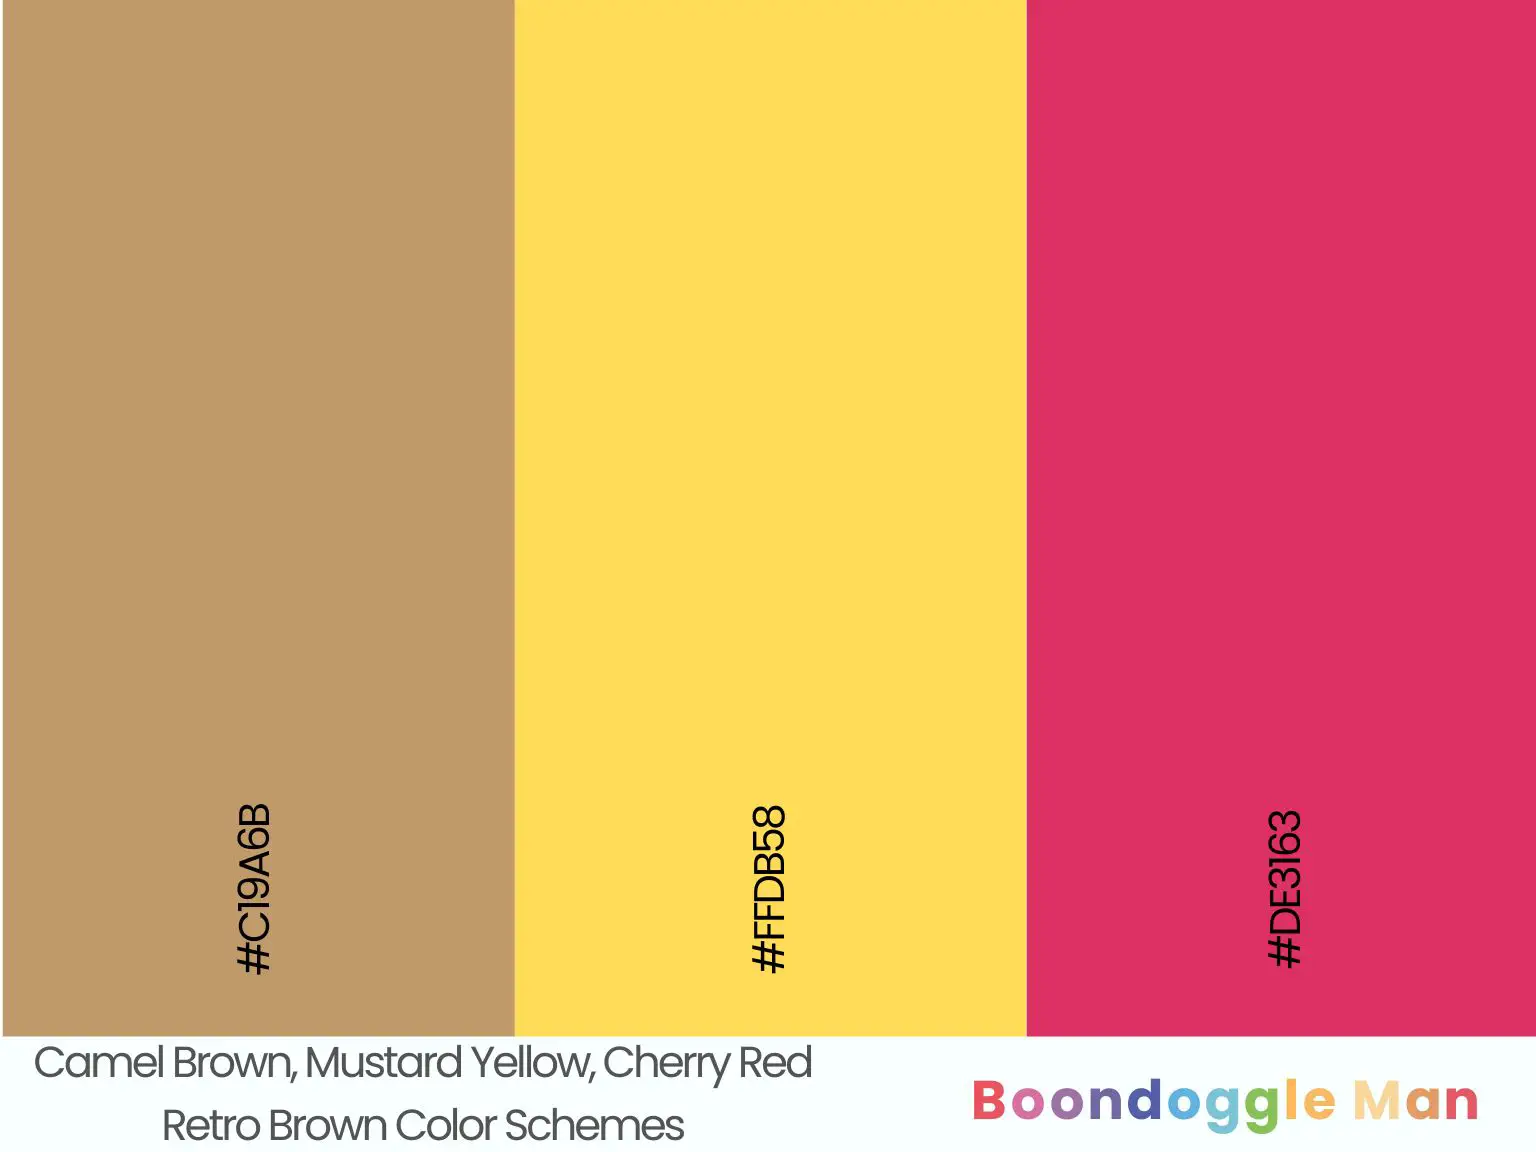 Camel Brown, Mustard Yellow, Cherry Red